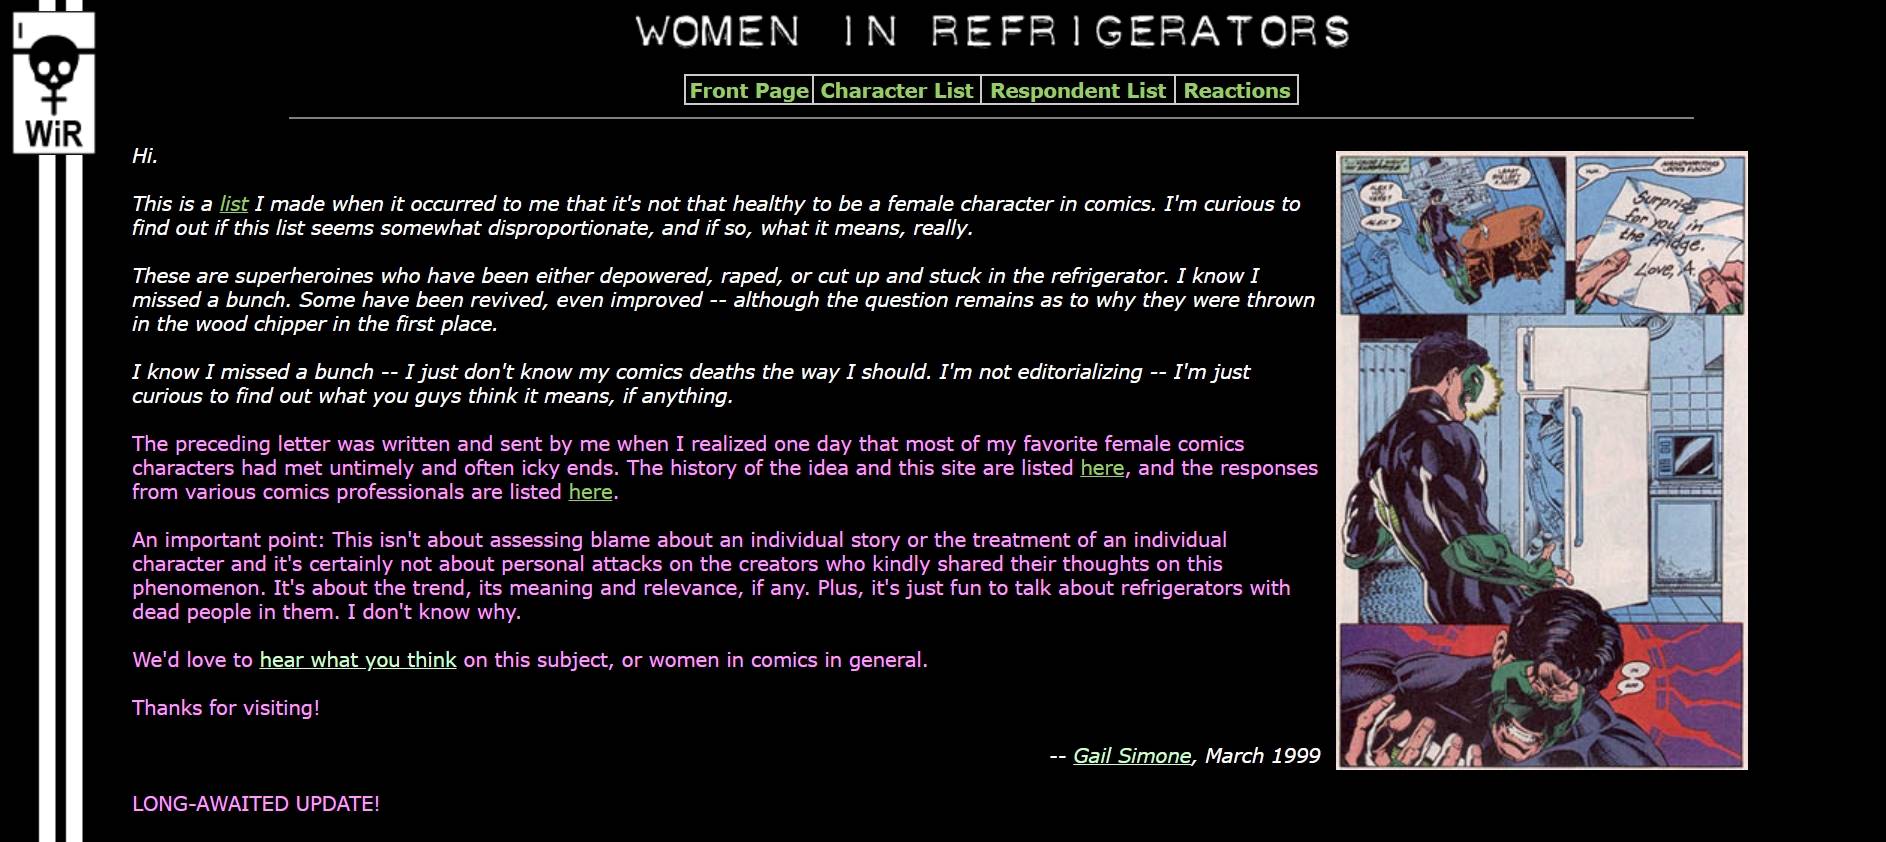 Gail Simone架設了「WOMEN IN REFRIGERATORS」網站